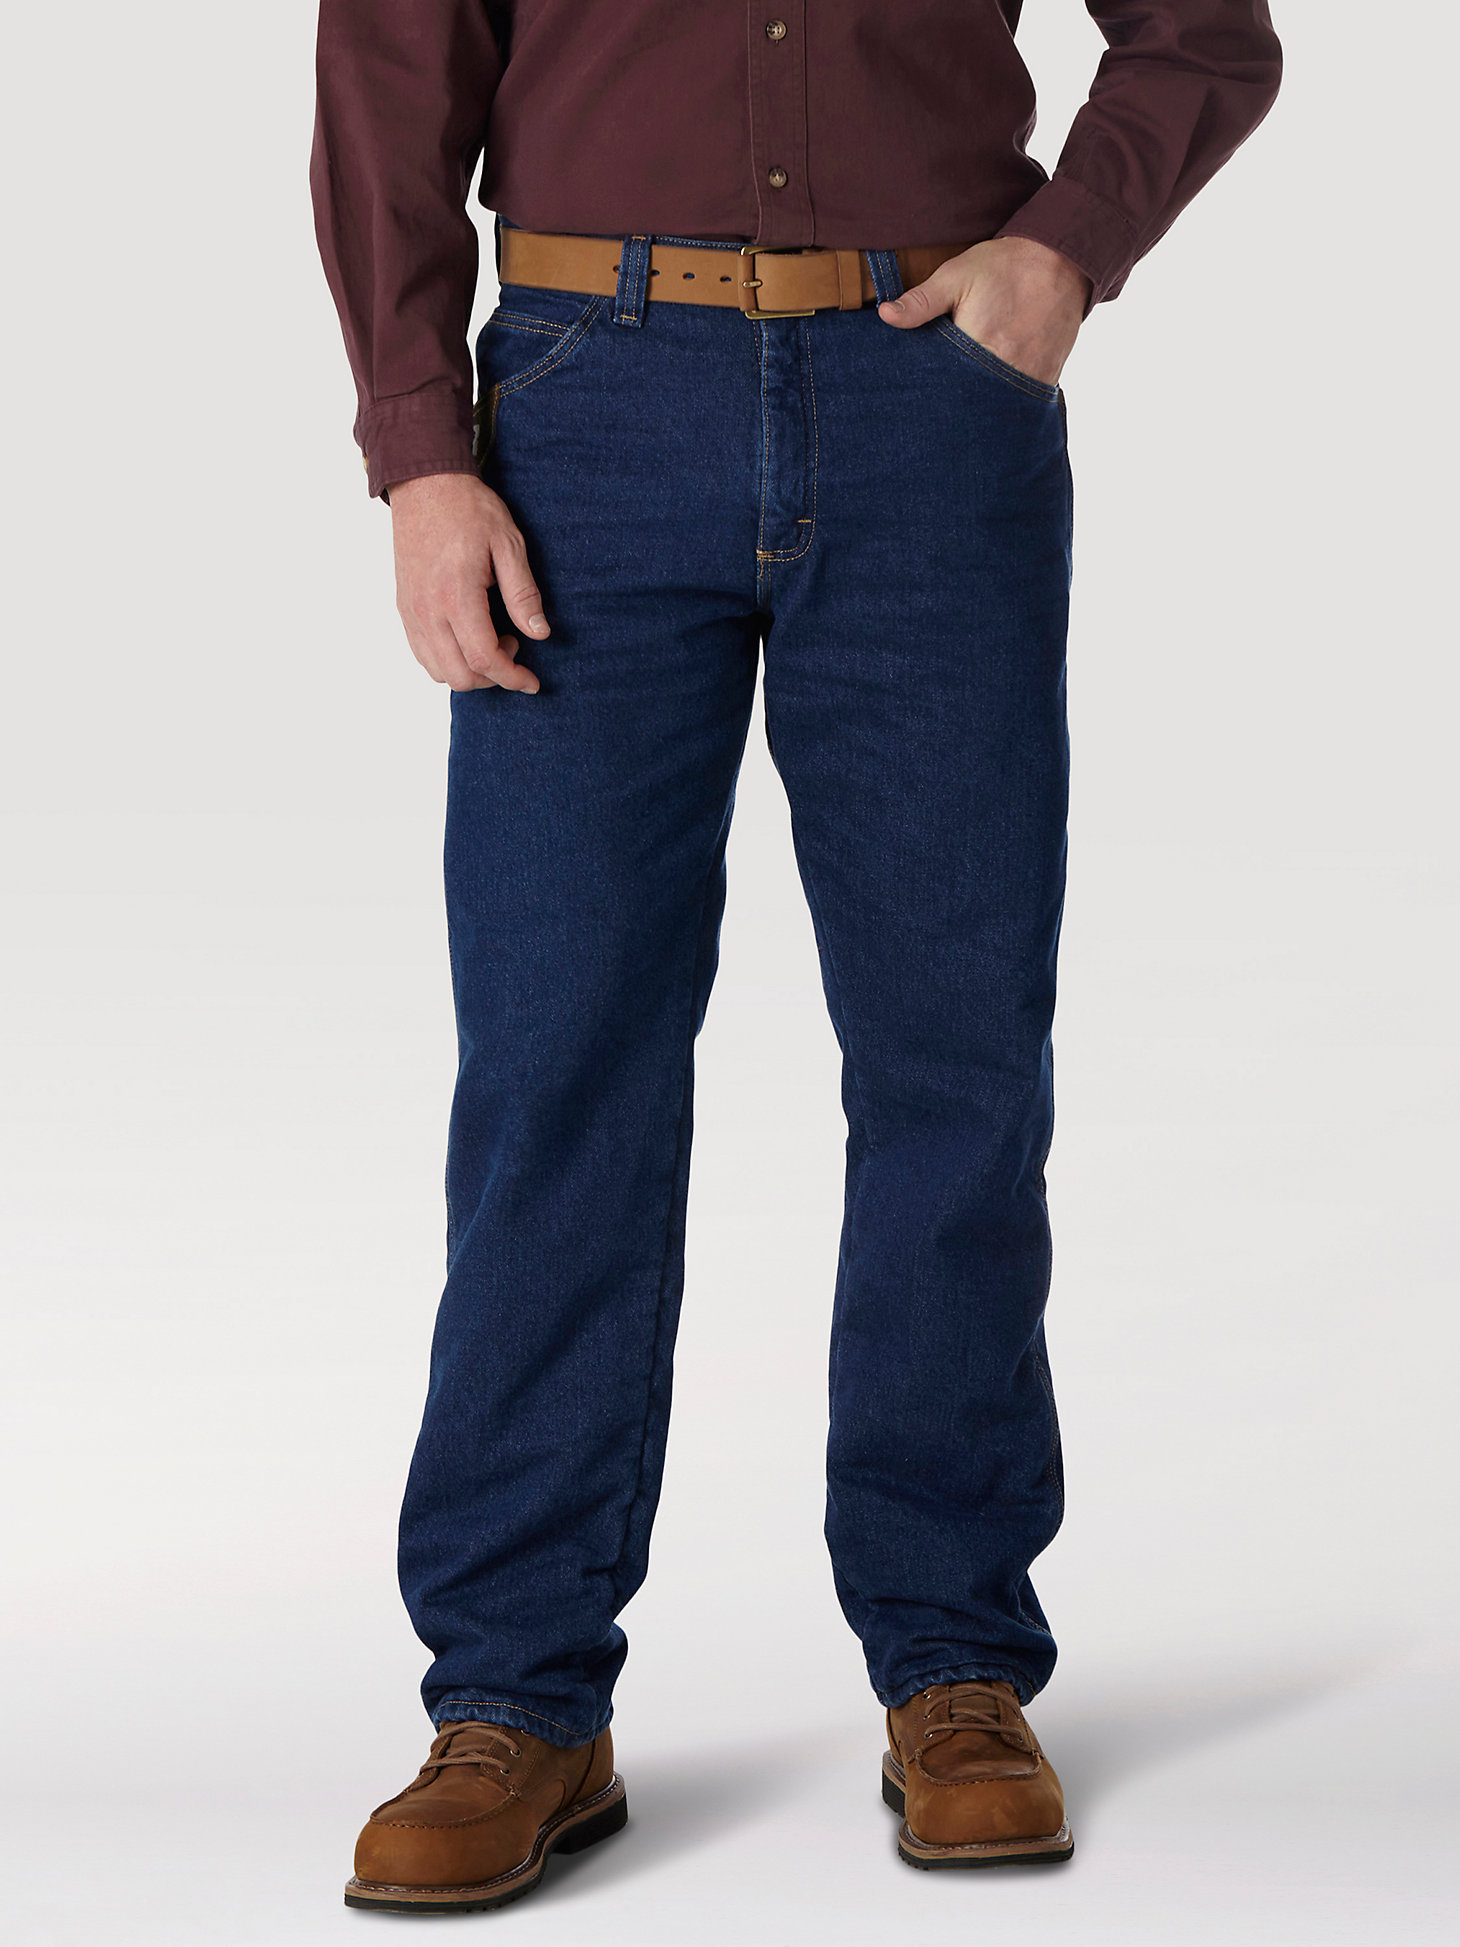 Plus size Men's Original Cotton Workwear Safety 5 Pocket Denim Jeans Trousers 